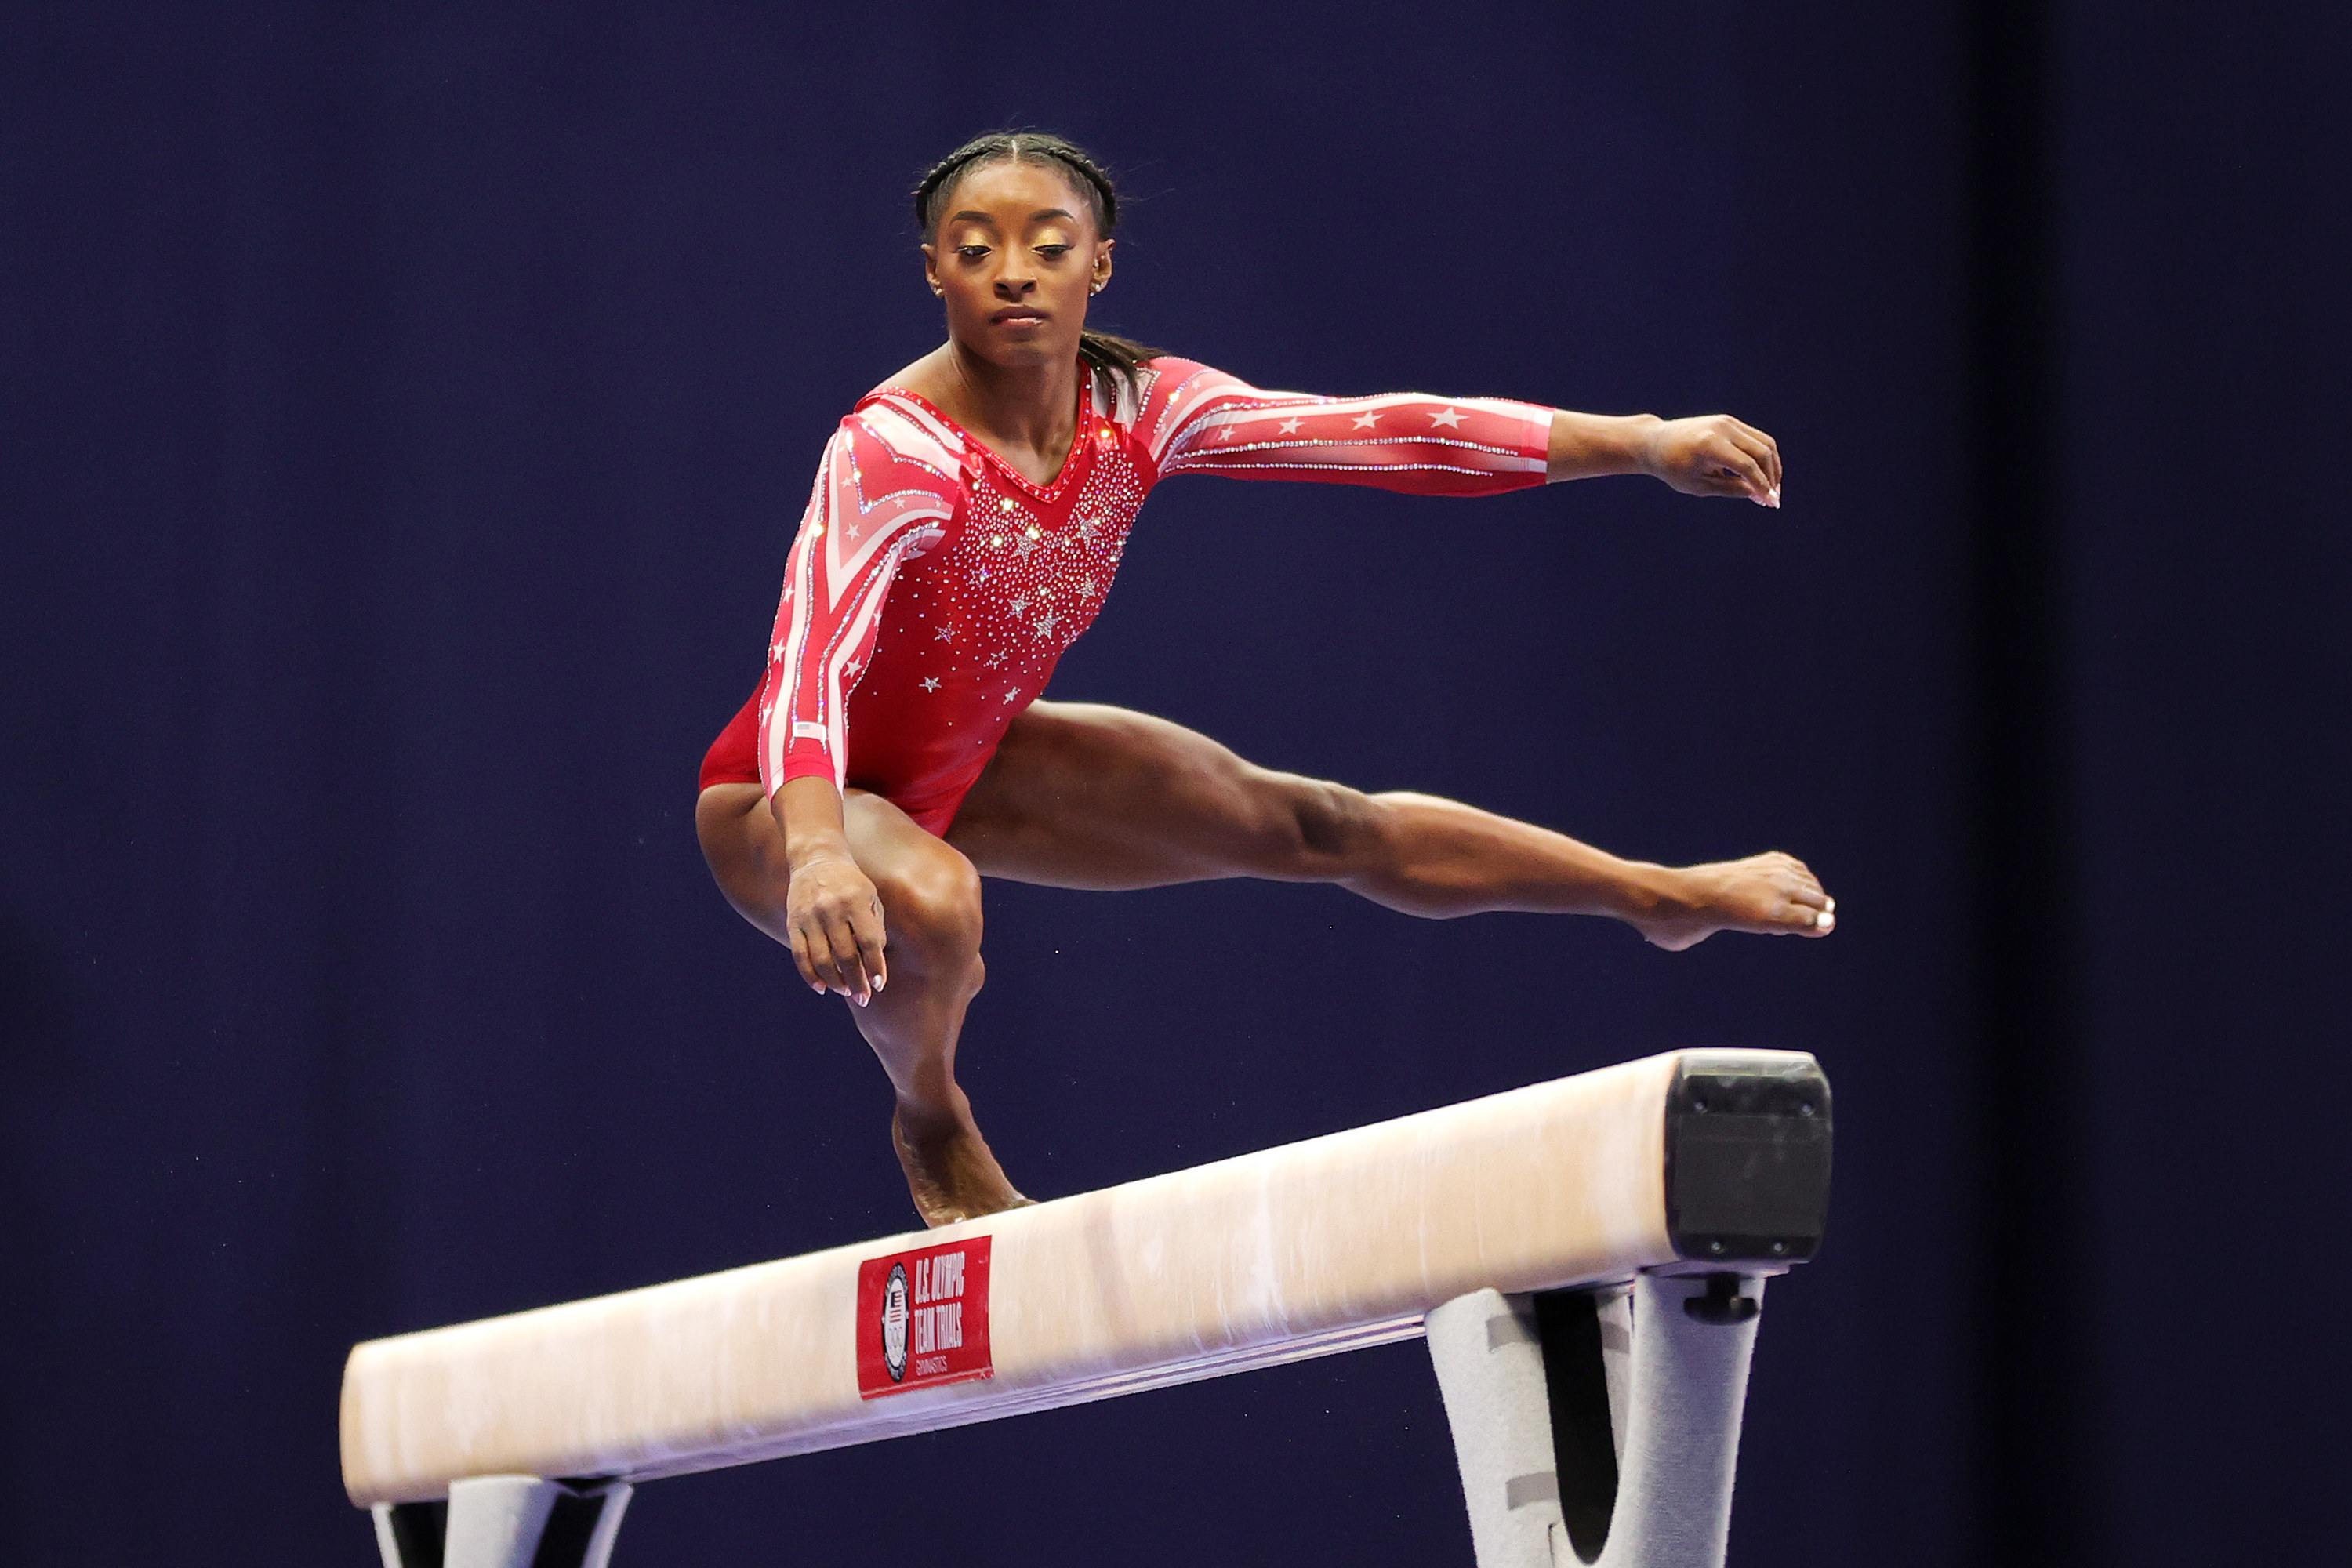 Simone on one leg on the balance beam